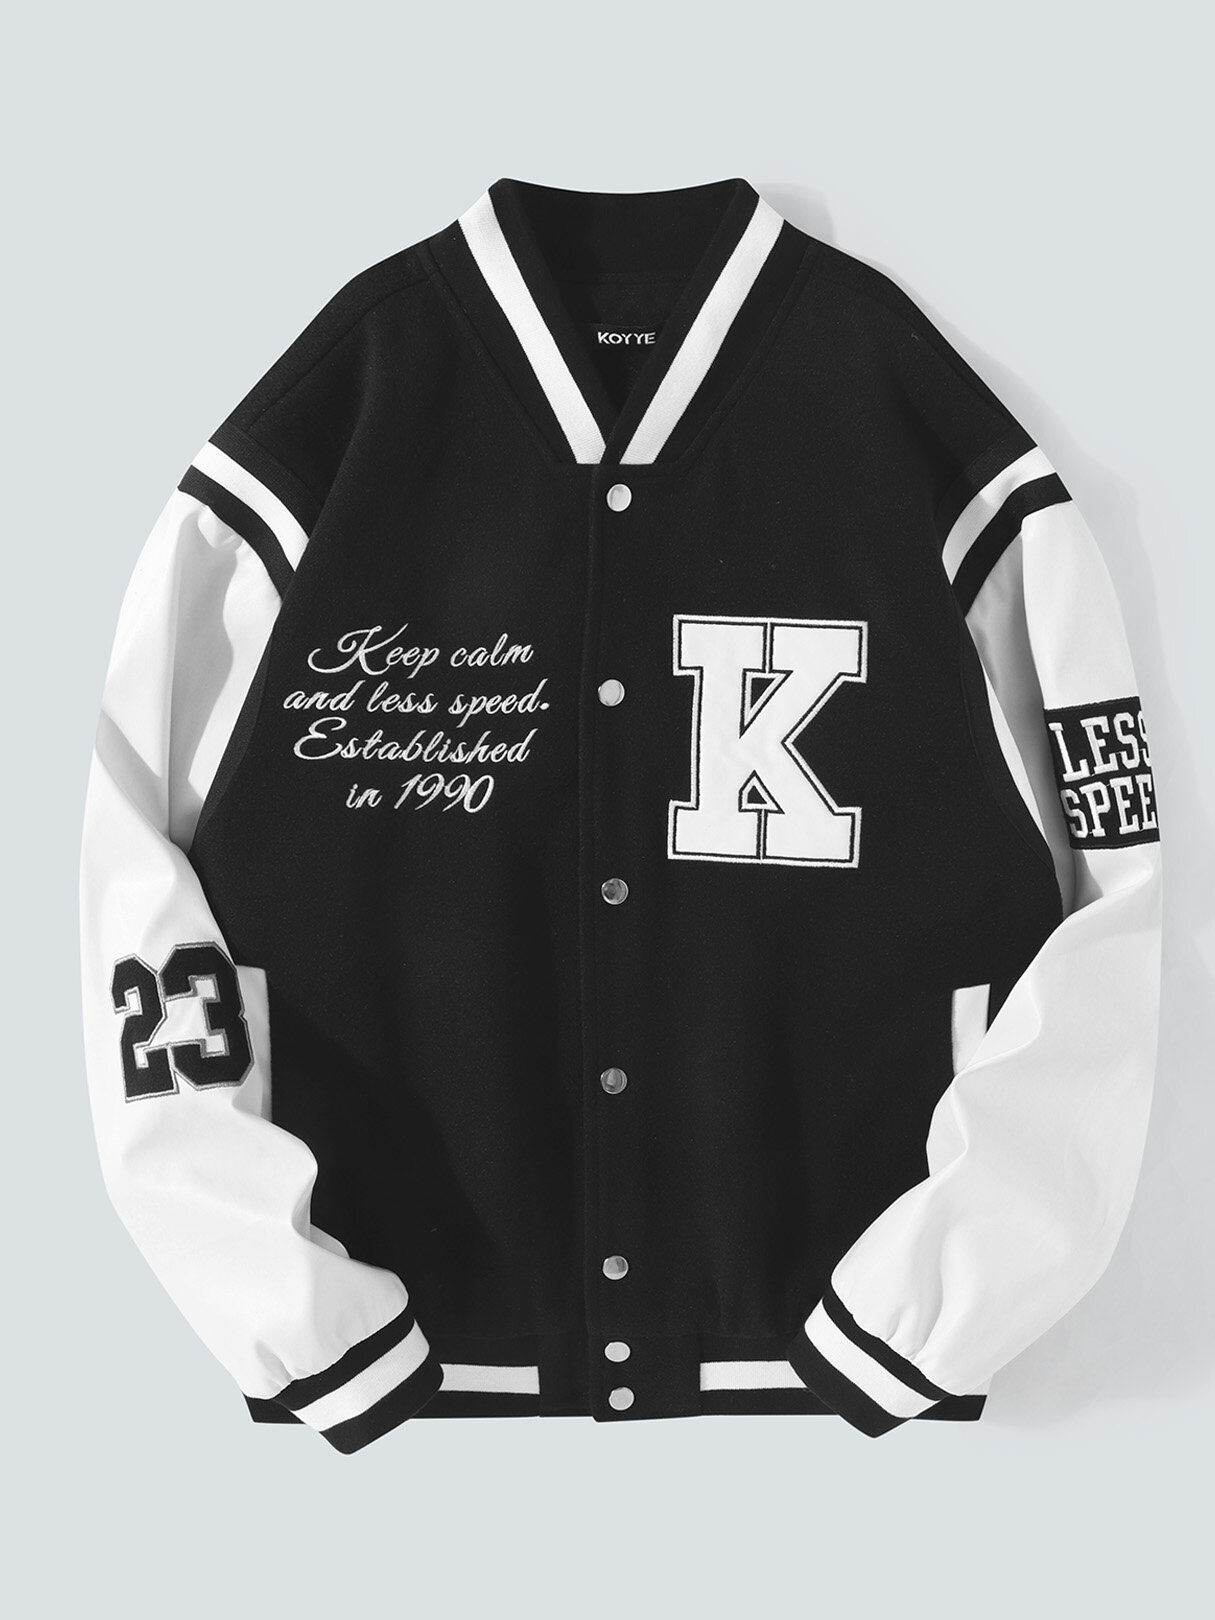 KOYYE Mens Letter Embroidered Patched Patchwork Varsity Baseball Jacket